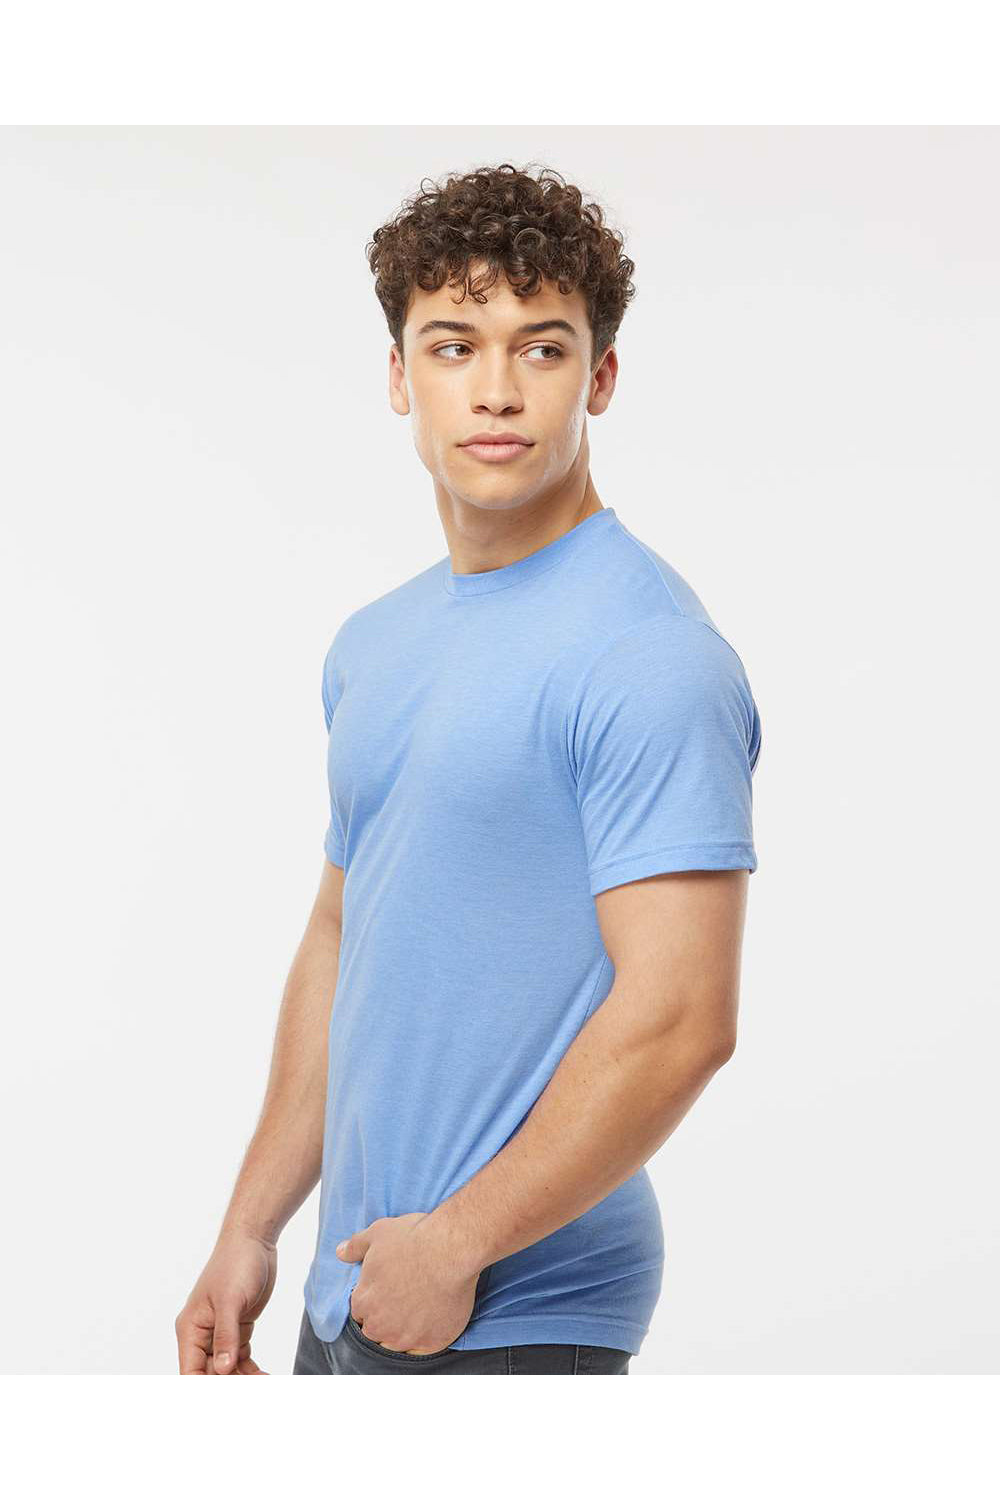 Tultex 241 Mens Poly-Rich Short Sleeve Crewneck T-Shirt Heather Athletic Blue Model Side